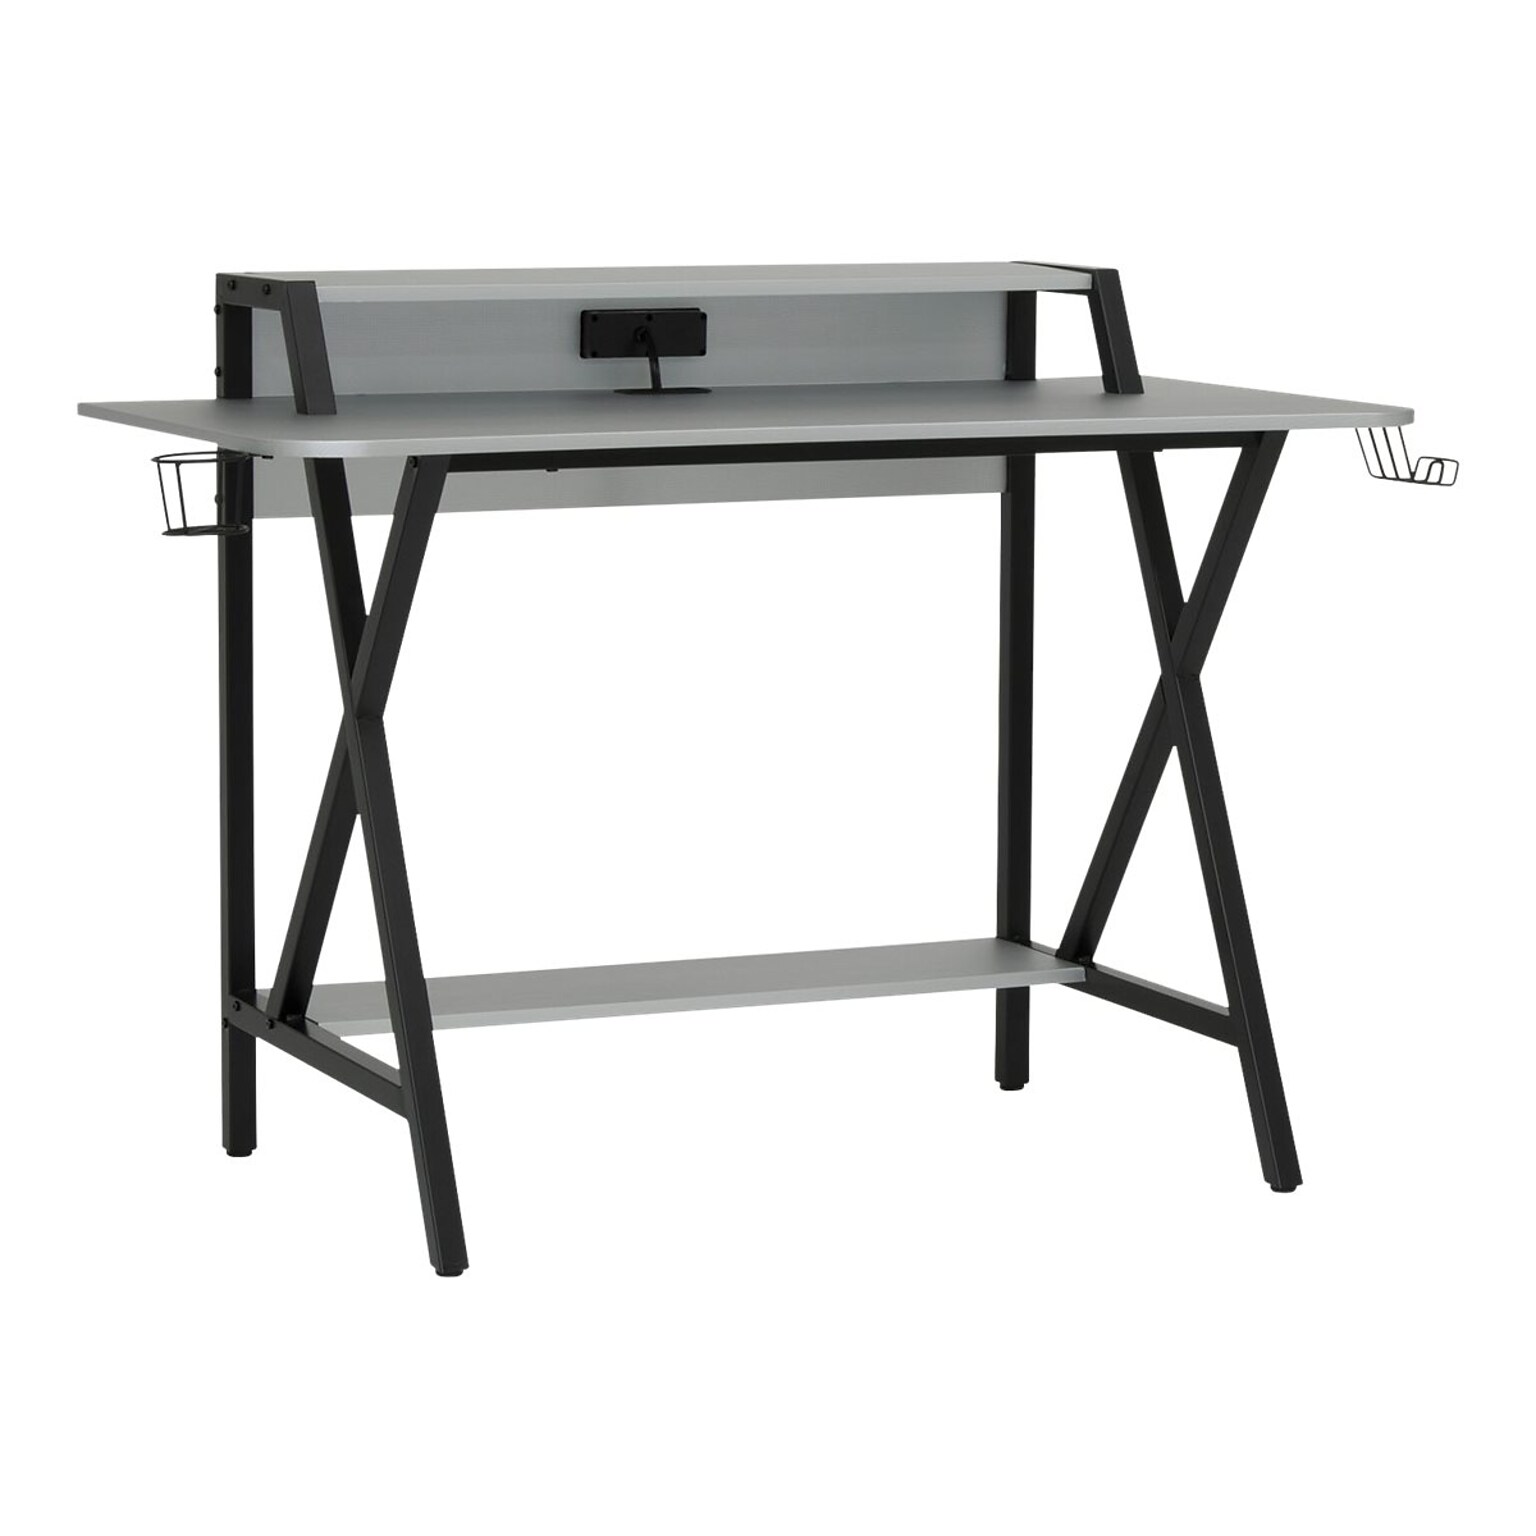 Studio Designs Challenger 53 Metal Computer Desk, Silver/Black (51256)